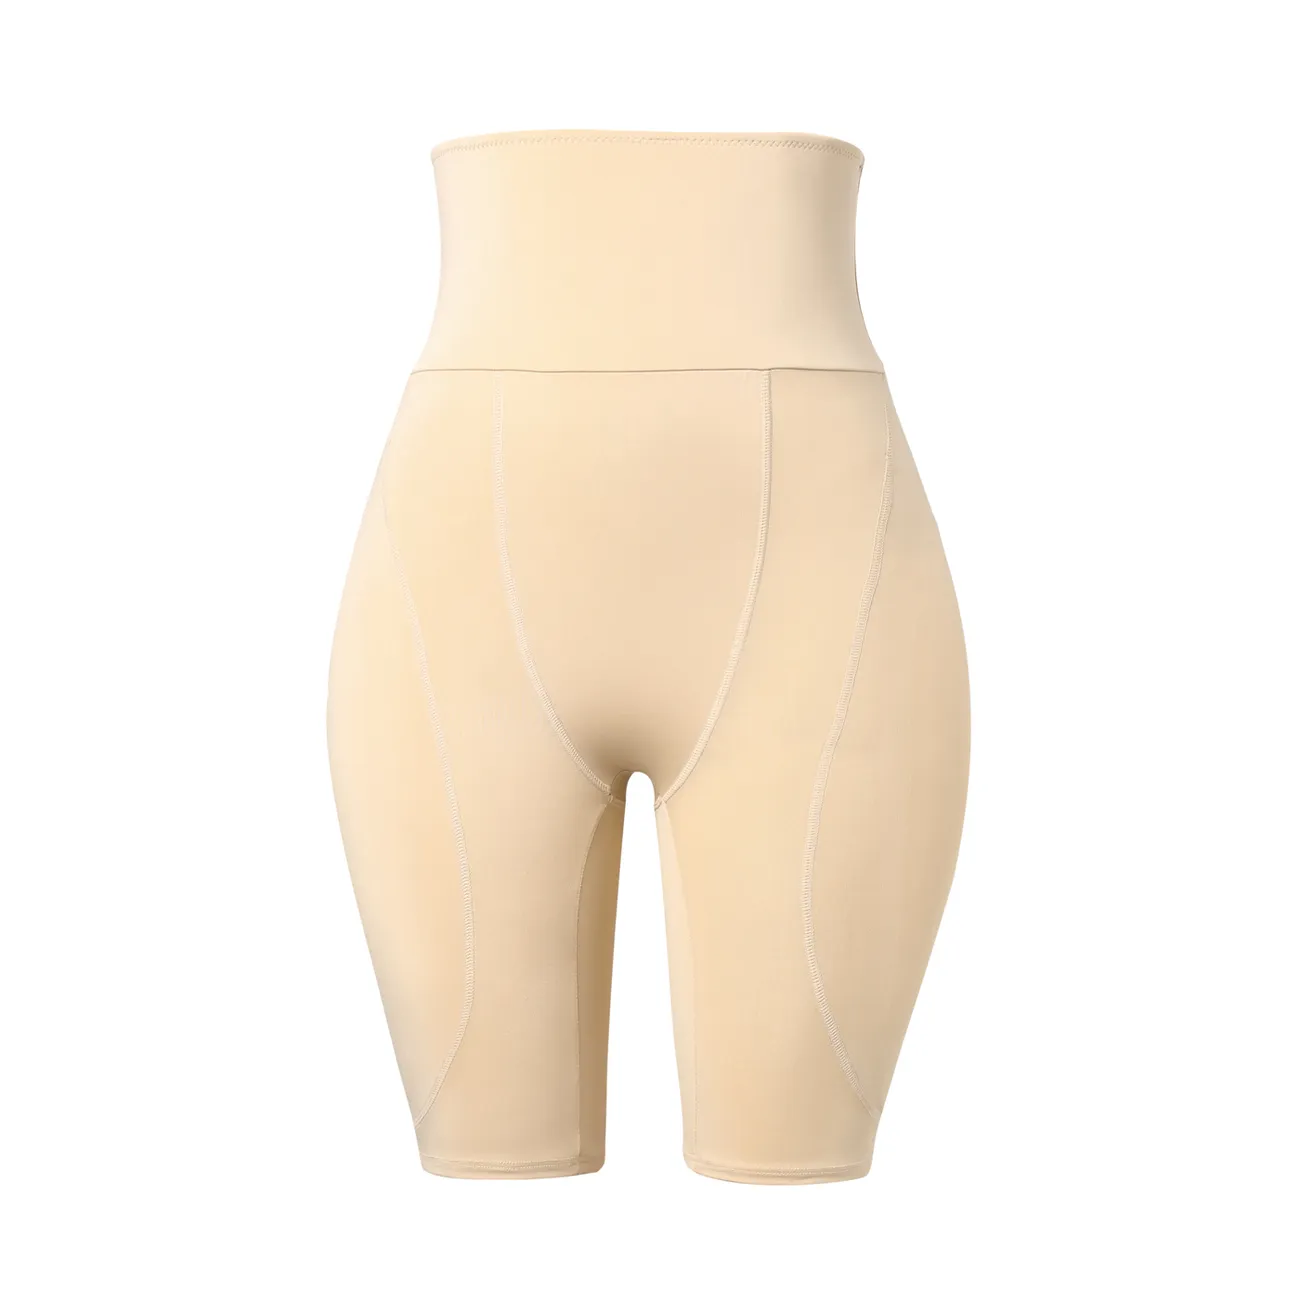 Women High-Rise Padded Shapewear Panties Hip Enhancer Panties Shaper Shorts Sponge Padded Butt Lifter Padded Shapewear Apricot big image 1